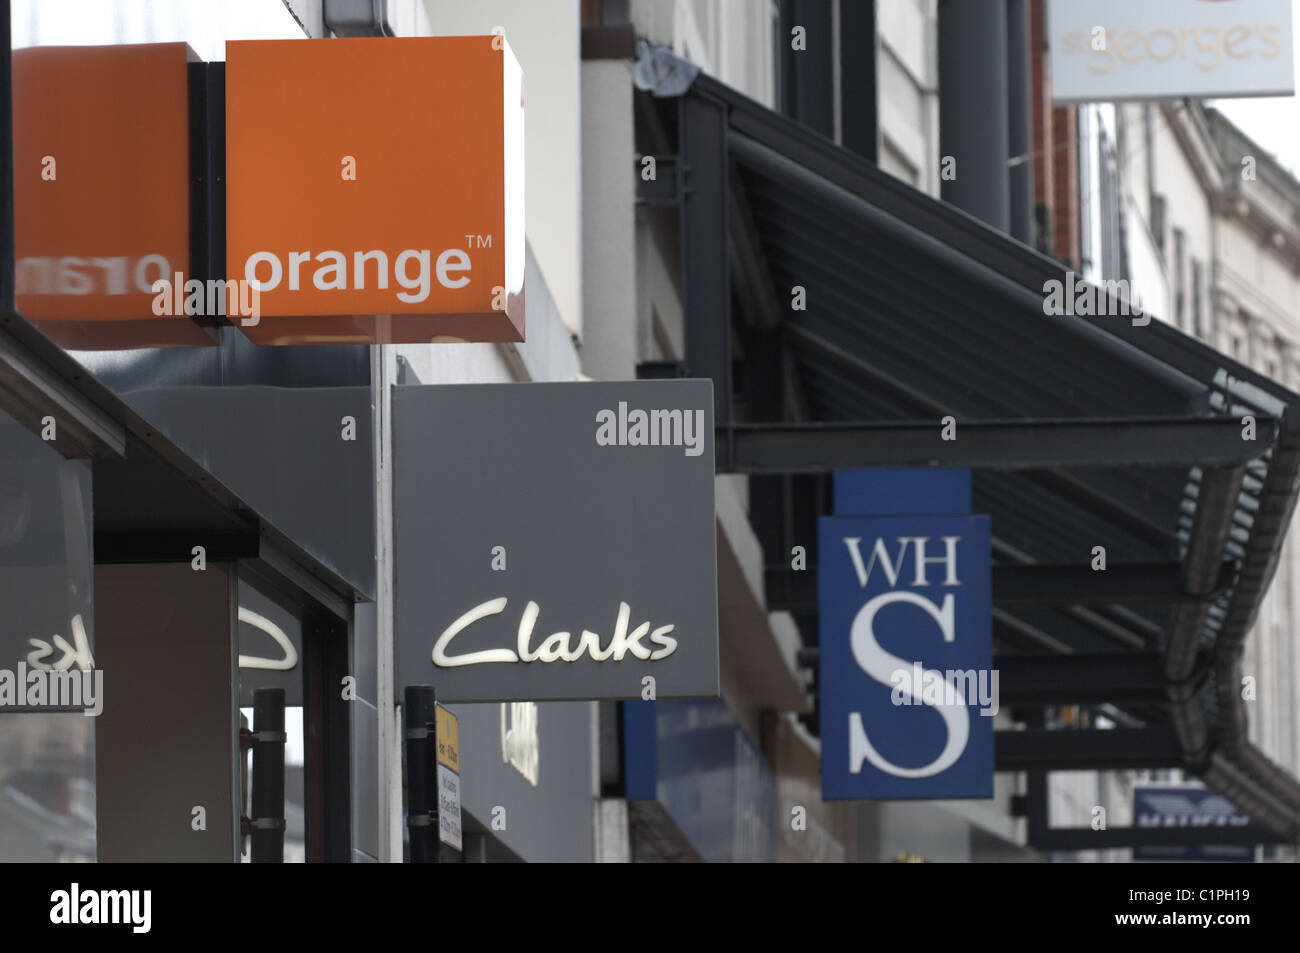 British high street shop sign Orange, Clarks, WHSmith Banque D'Images